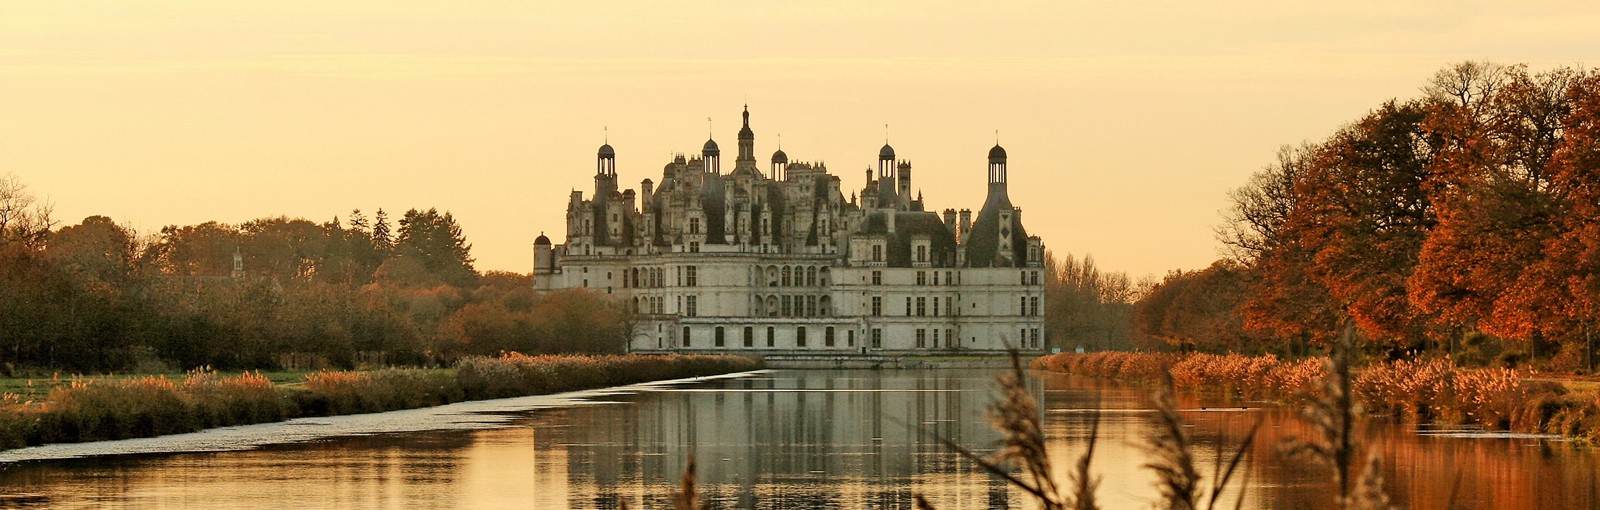 Tours 香波堡-舍农索城堡-谢韦尔尼城堡或肖蒙城堡或布洛瓦城堡 - 一日游 - 从巴黎出发的一日游